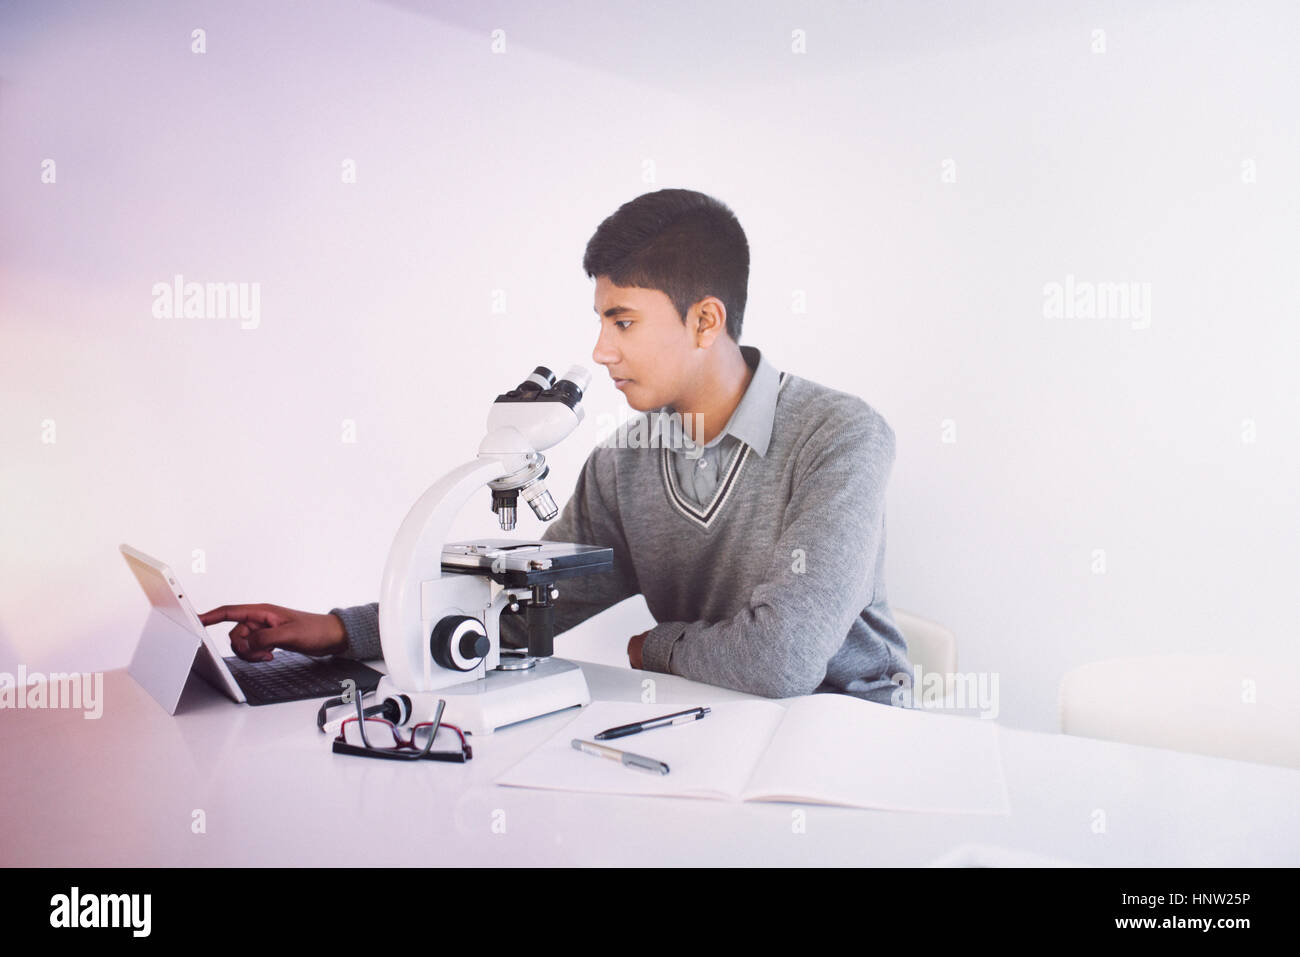 Fiji Indian boy using digital tablet and microscope Stock Photo